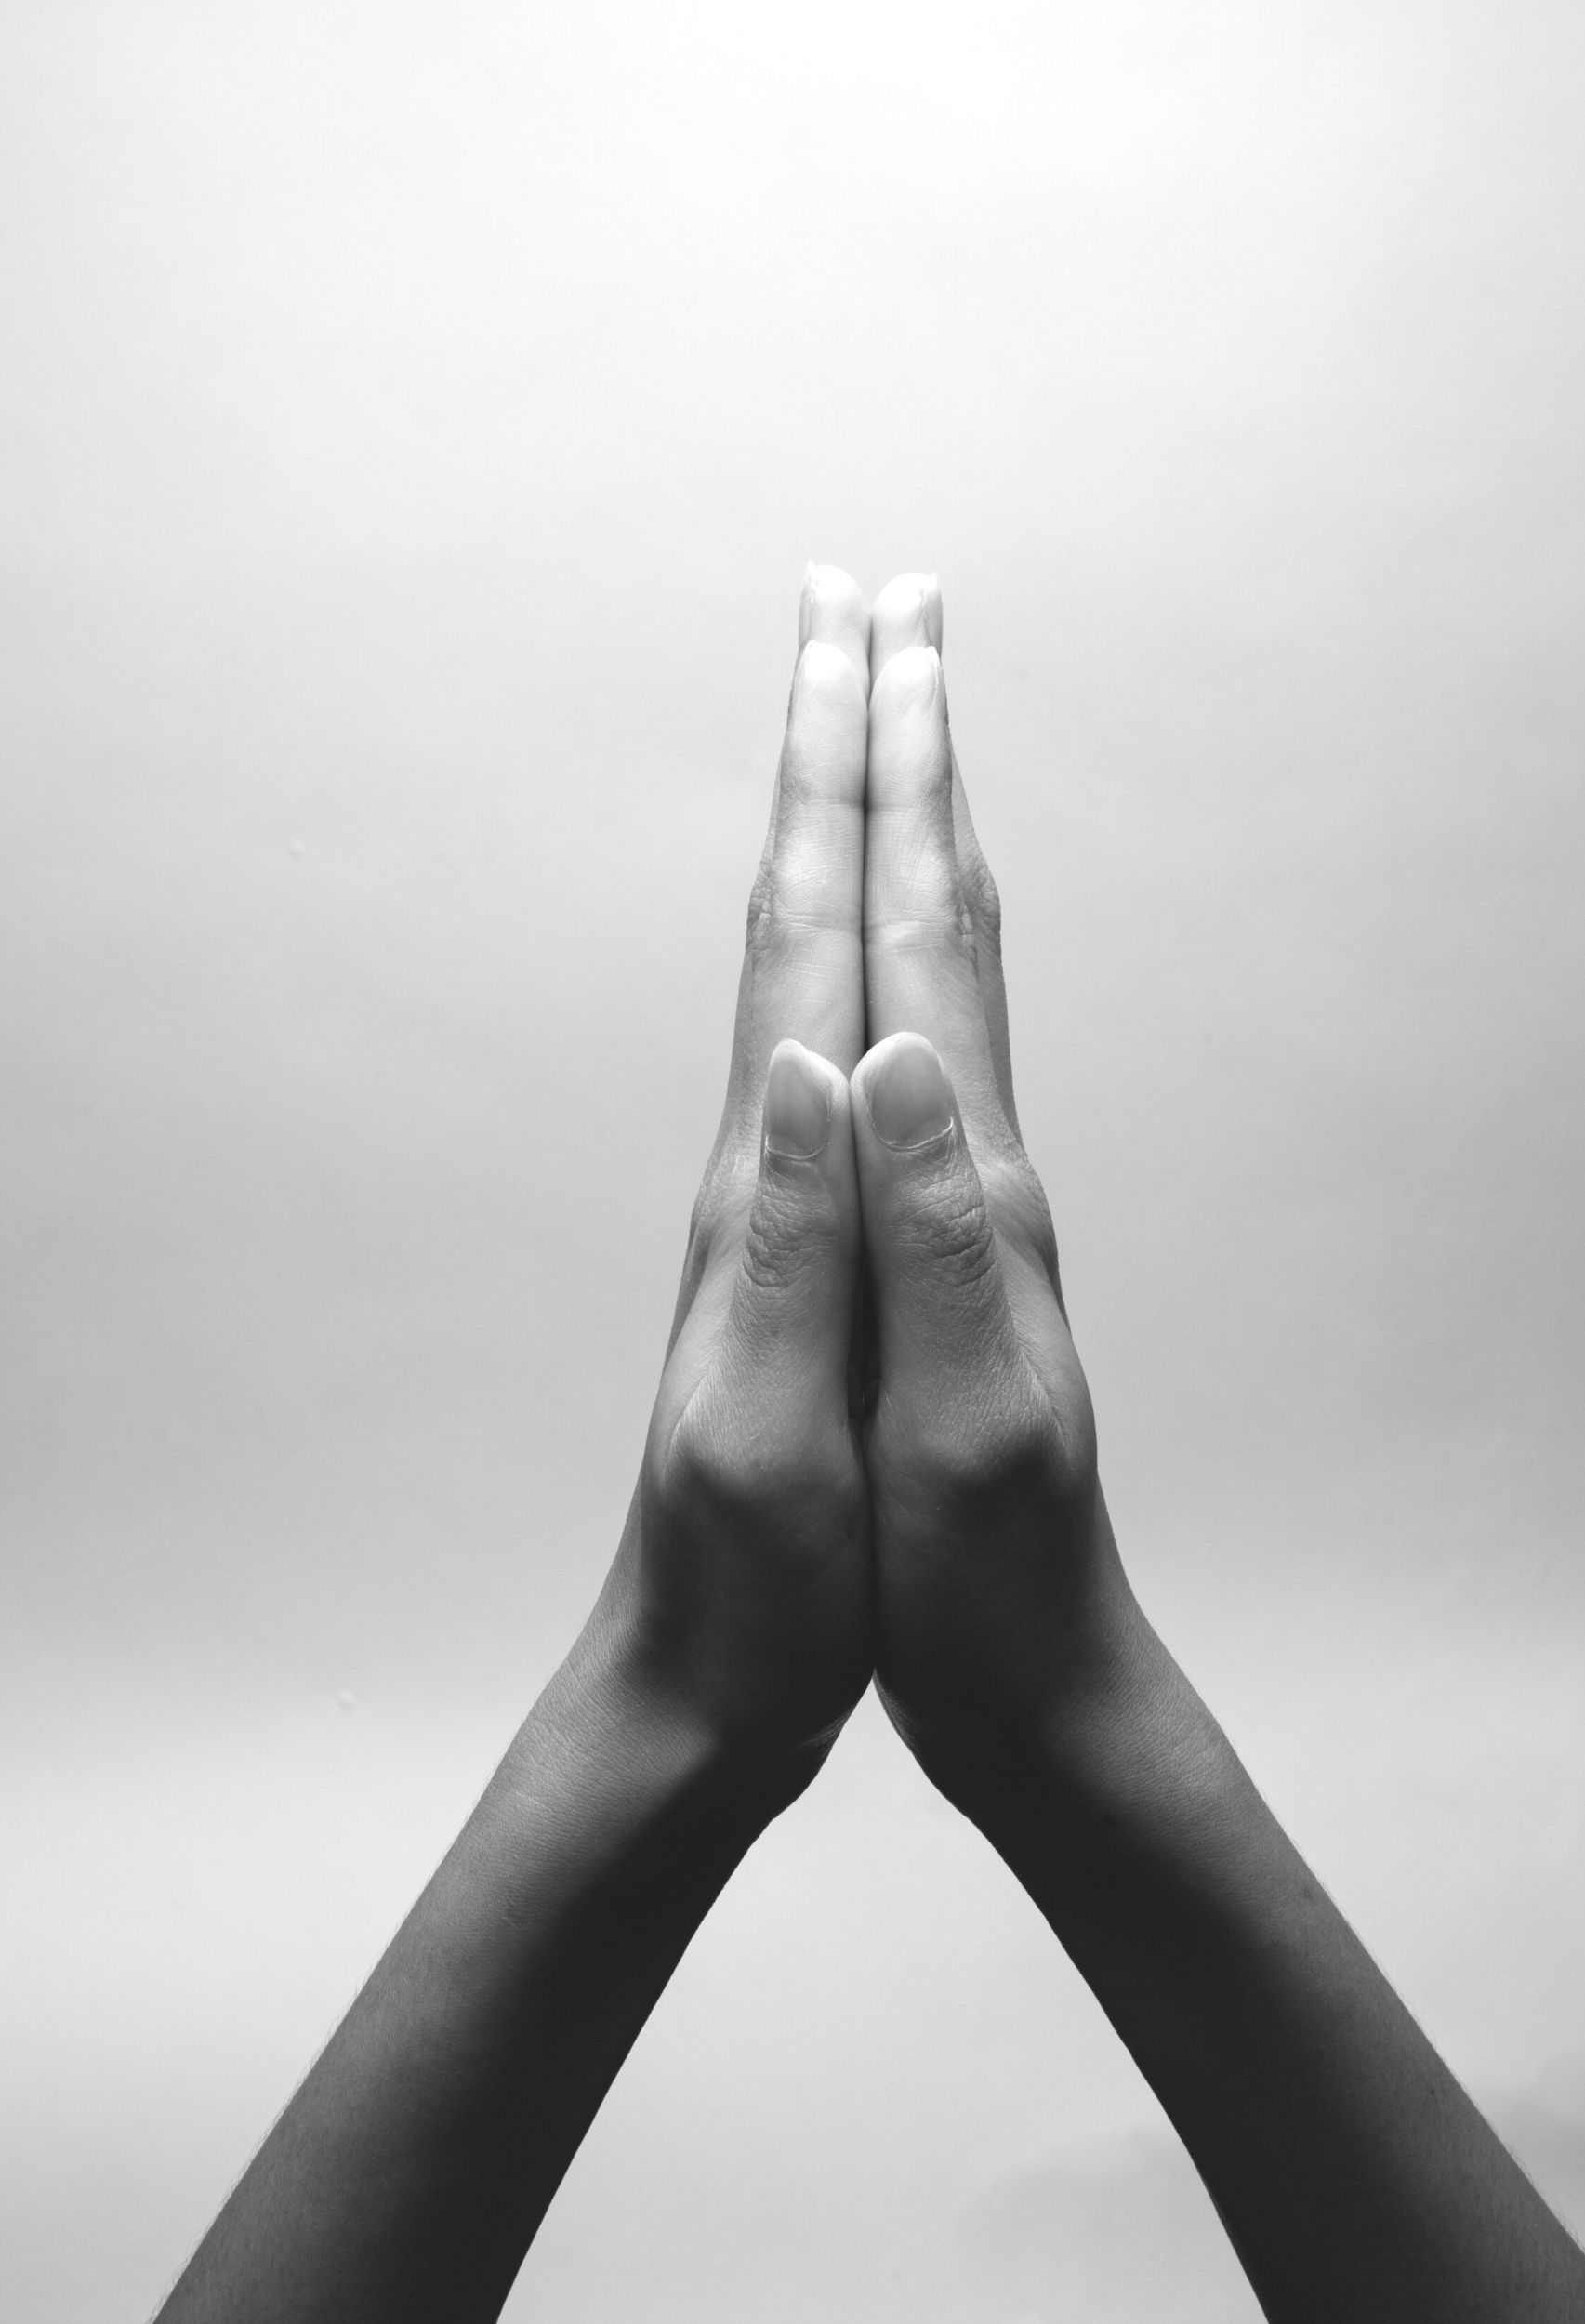 How Does Online Prayer Request Process Work - Rita Reviews